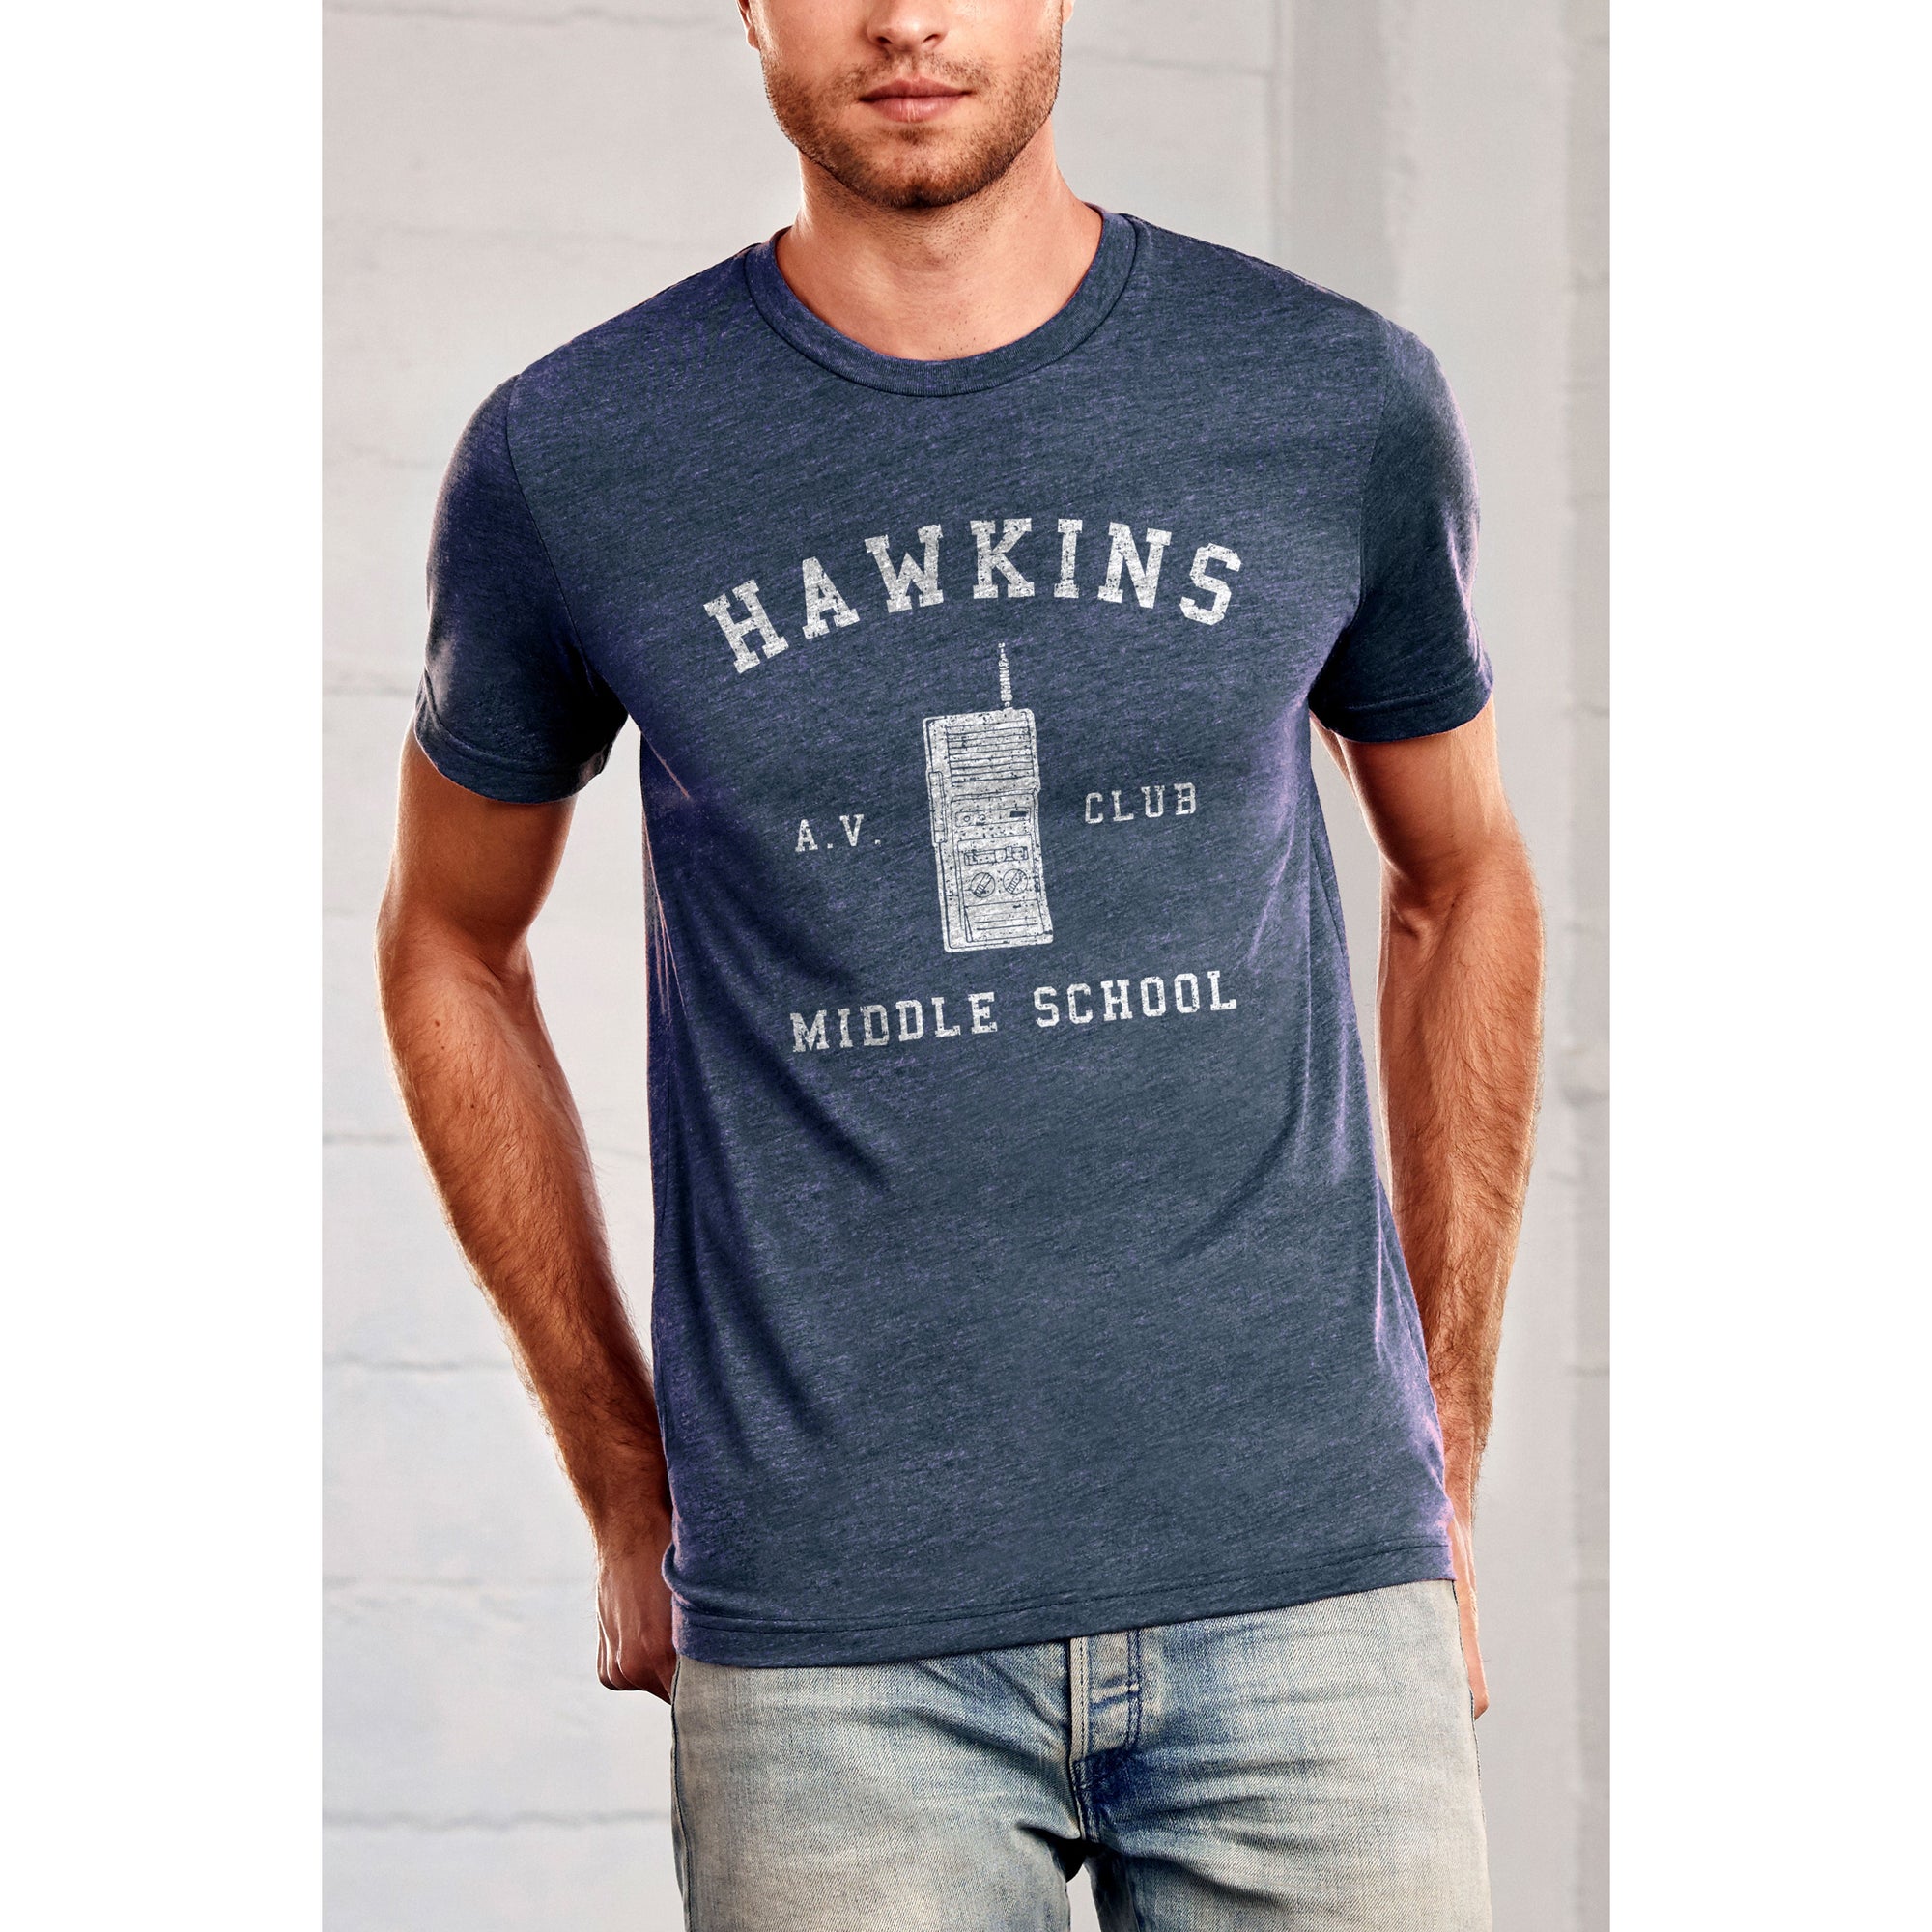 Hawkins Middle School Printed Graphic Men's Crew T-Shirt Vintage White Model Image